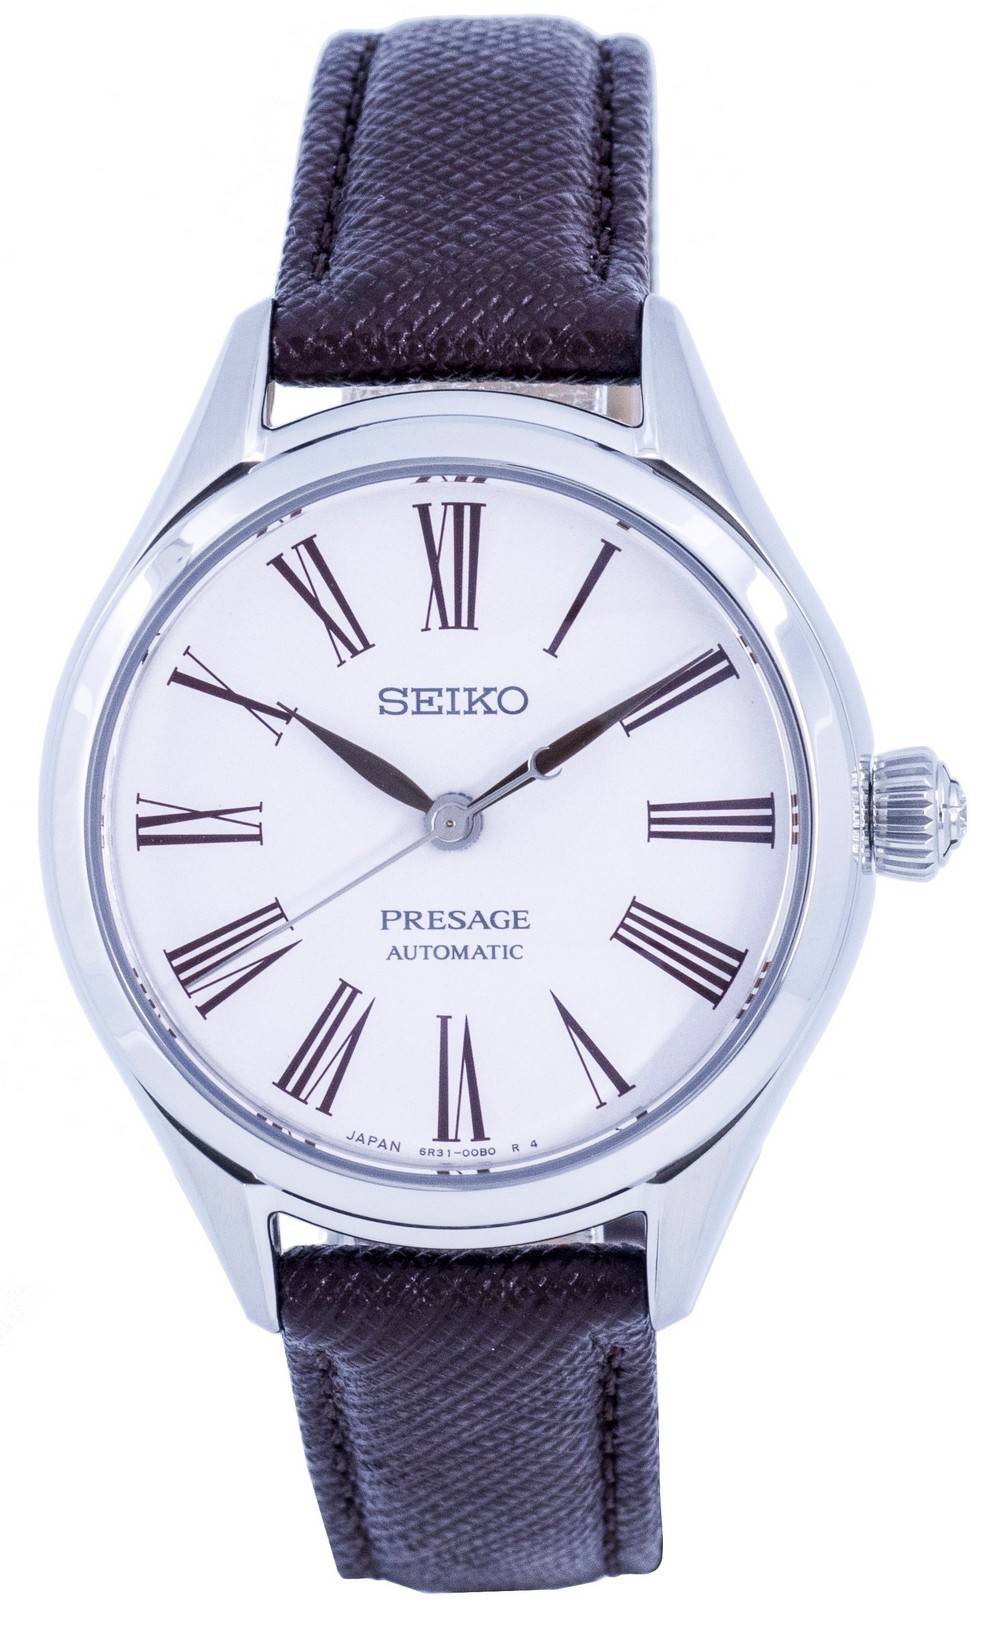 Đồng hồ Seiko Presage Leather White Dial Automatic SPB233 SPB233J1 SPB233J  Đồng hồ nữ vi